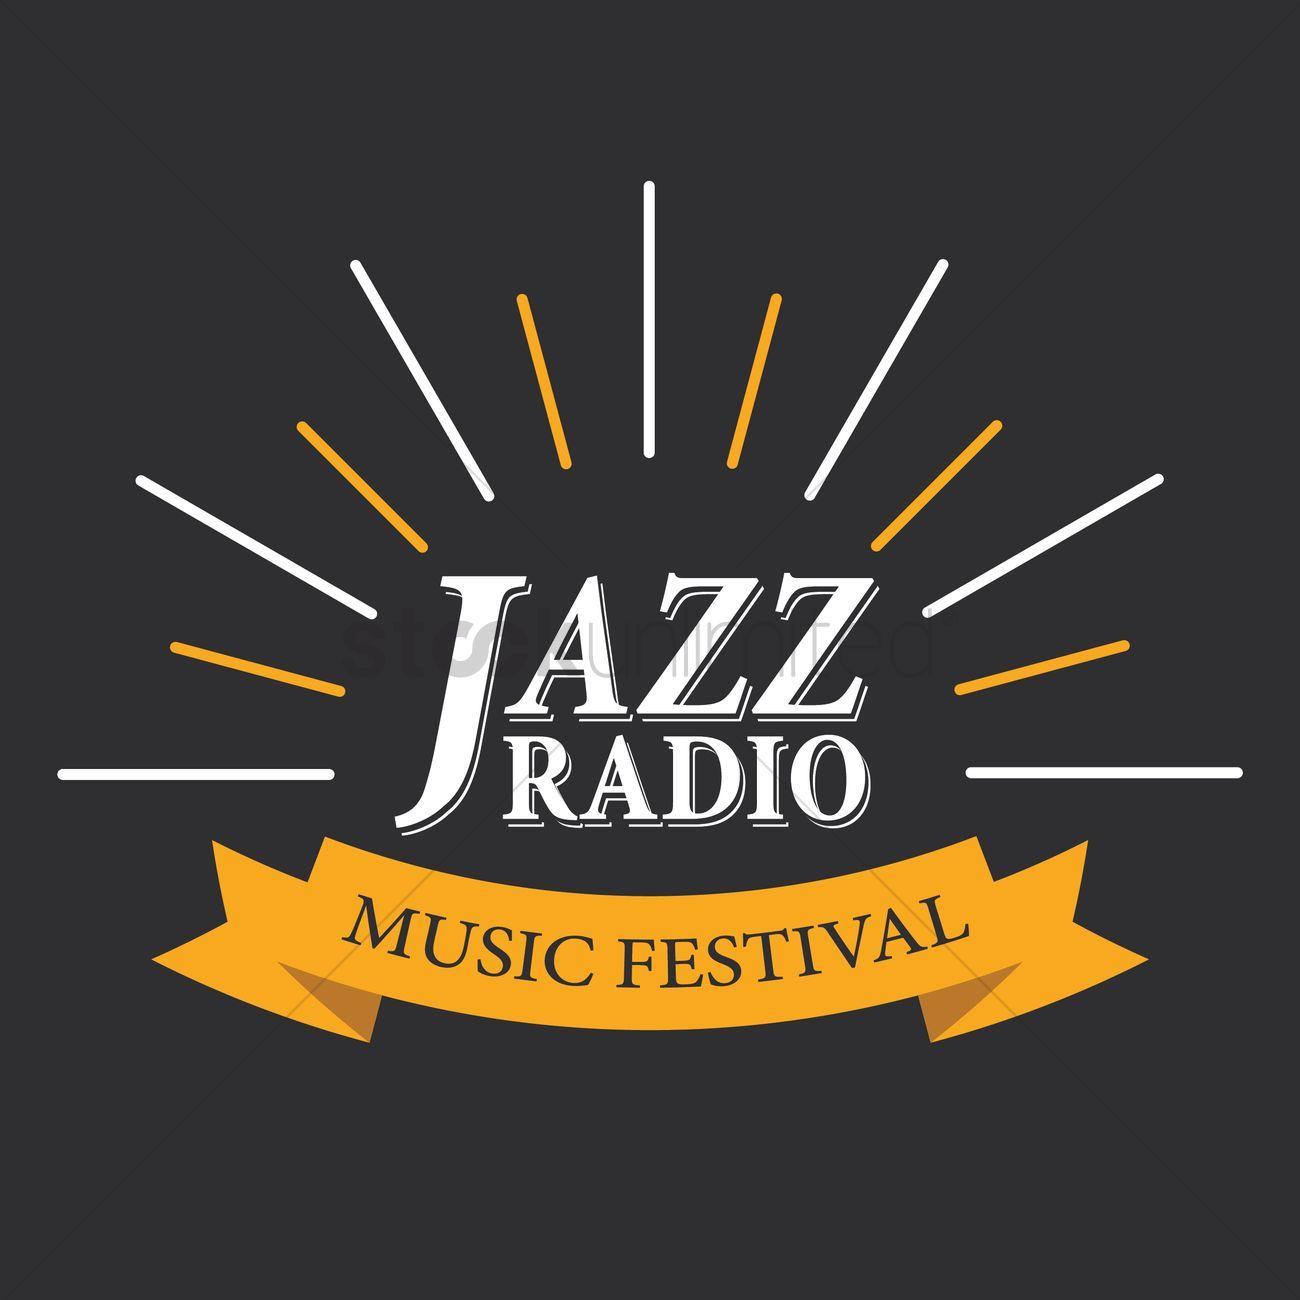 Jazz Radio Logo - Jazz radio music festival logo Vector Image